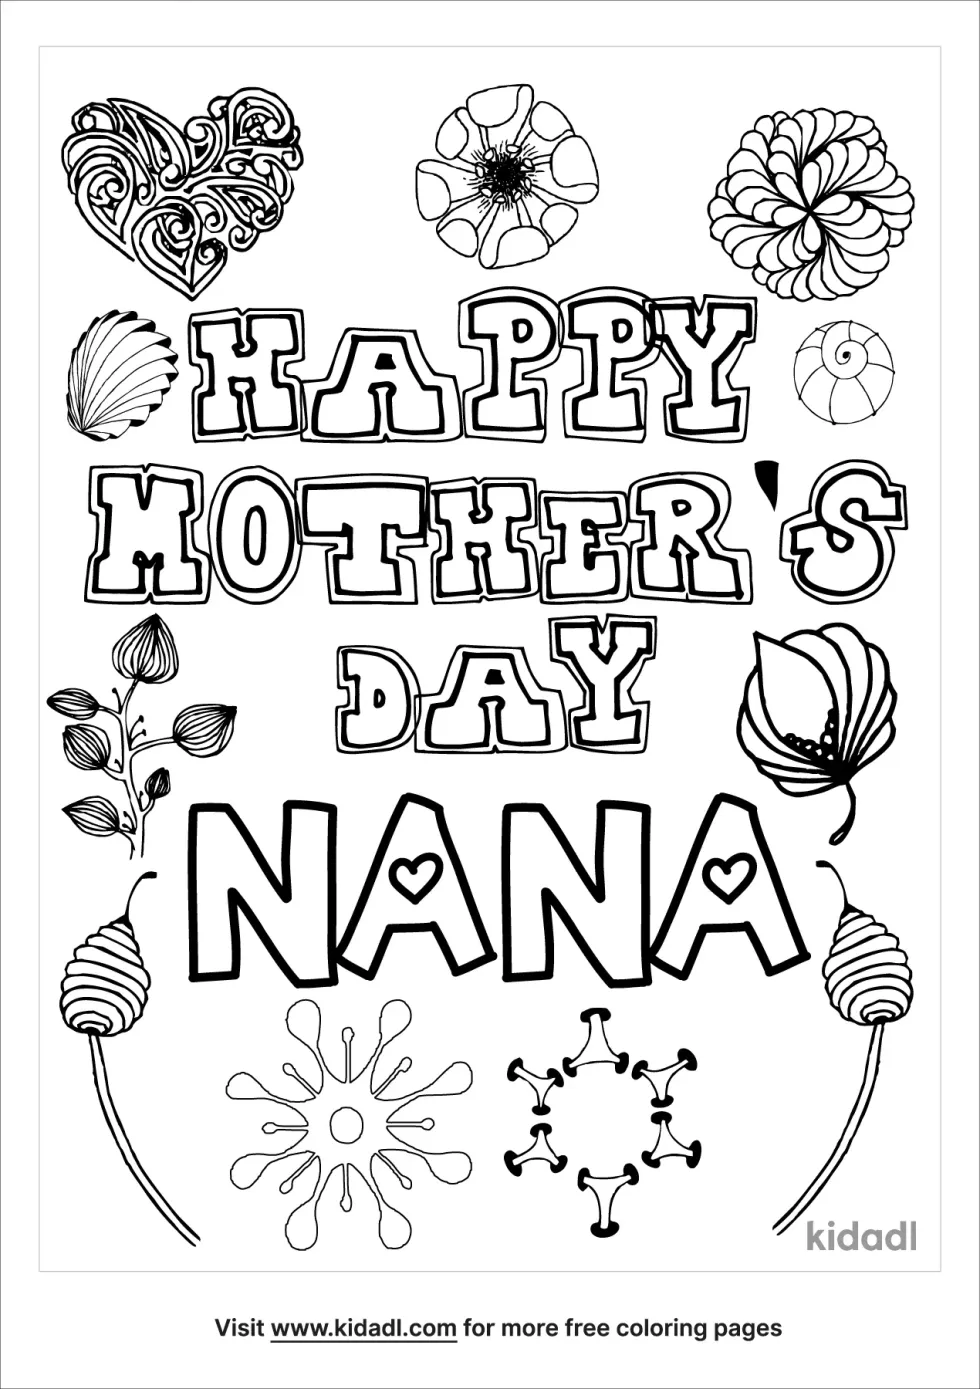 Happy Mother's Day Nana